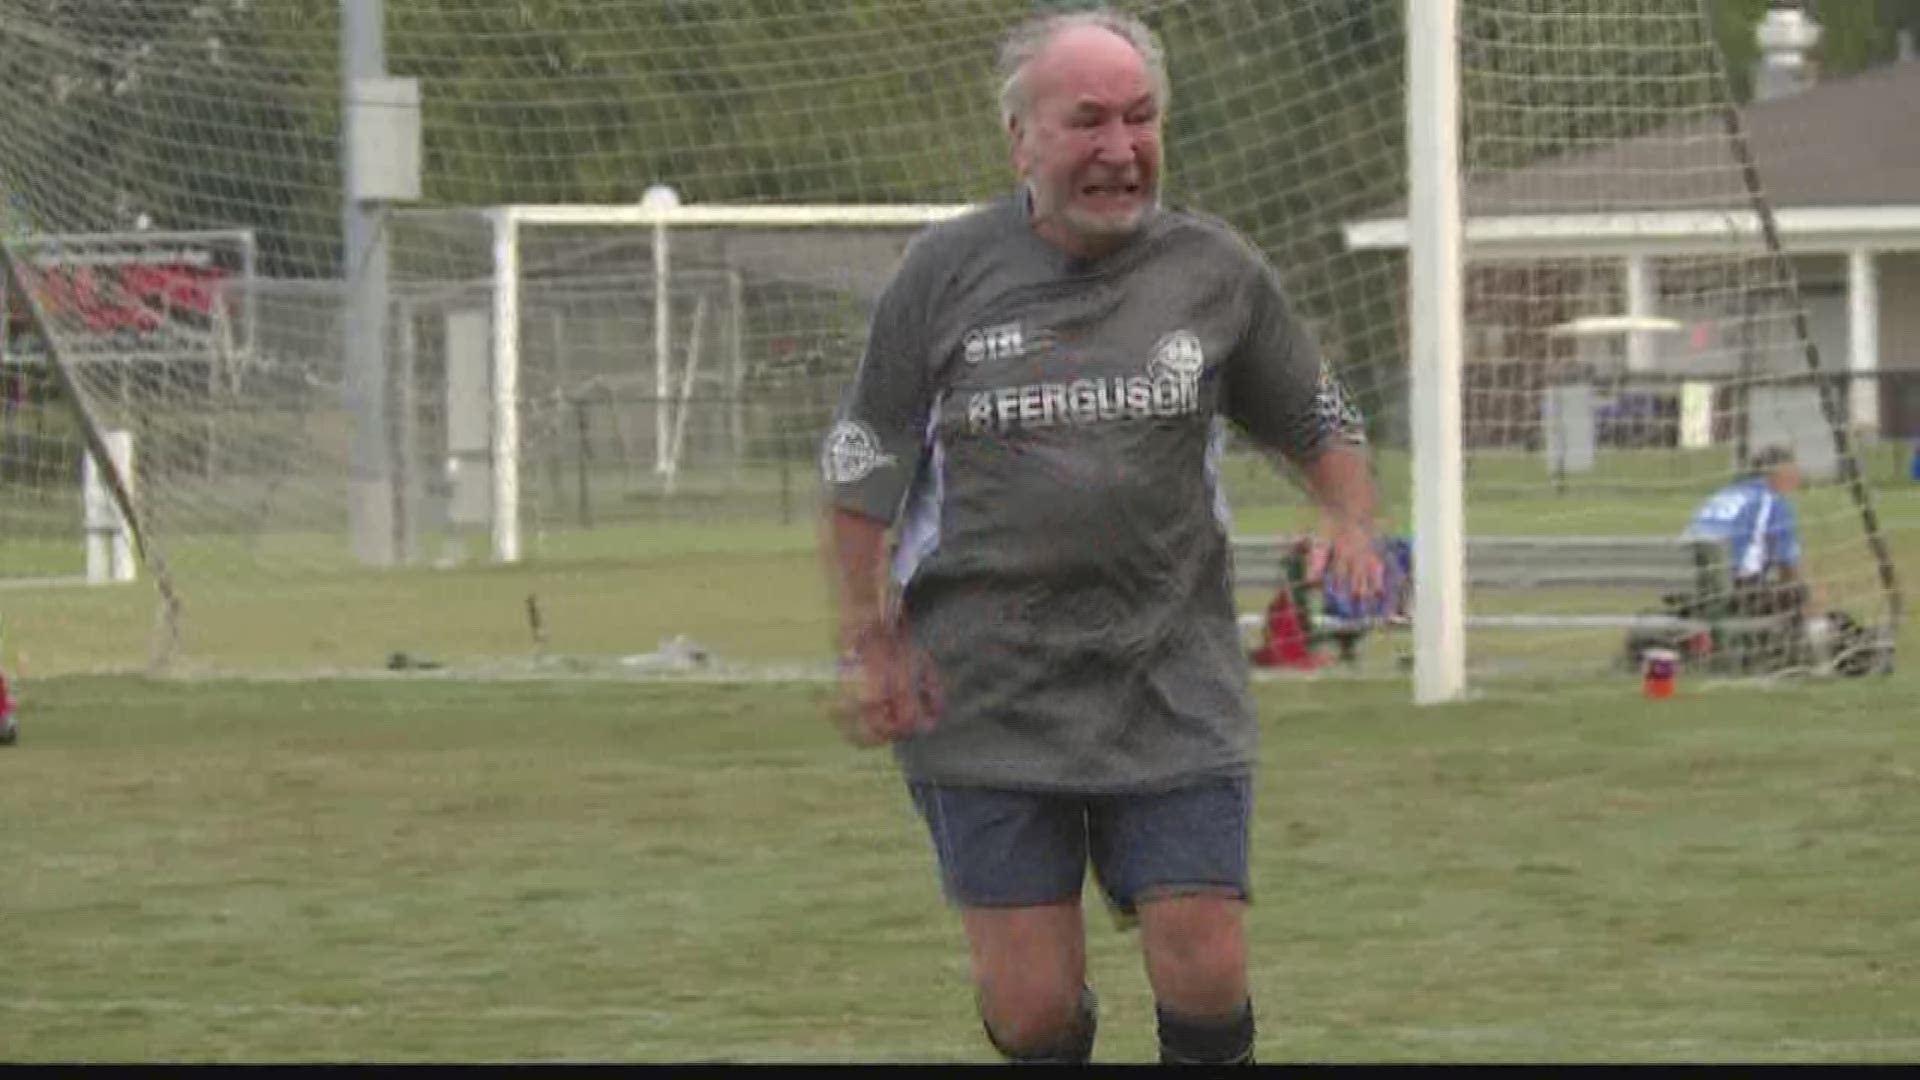 At 85 years old, John Samuel plays in a weekly soccer league in Virginia Beach